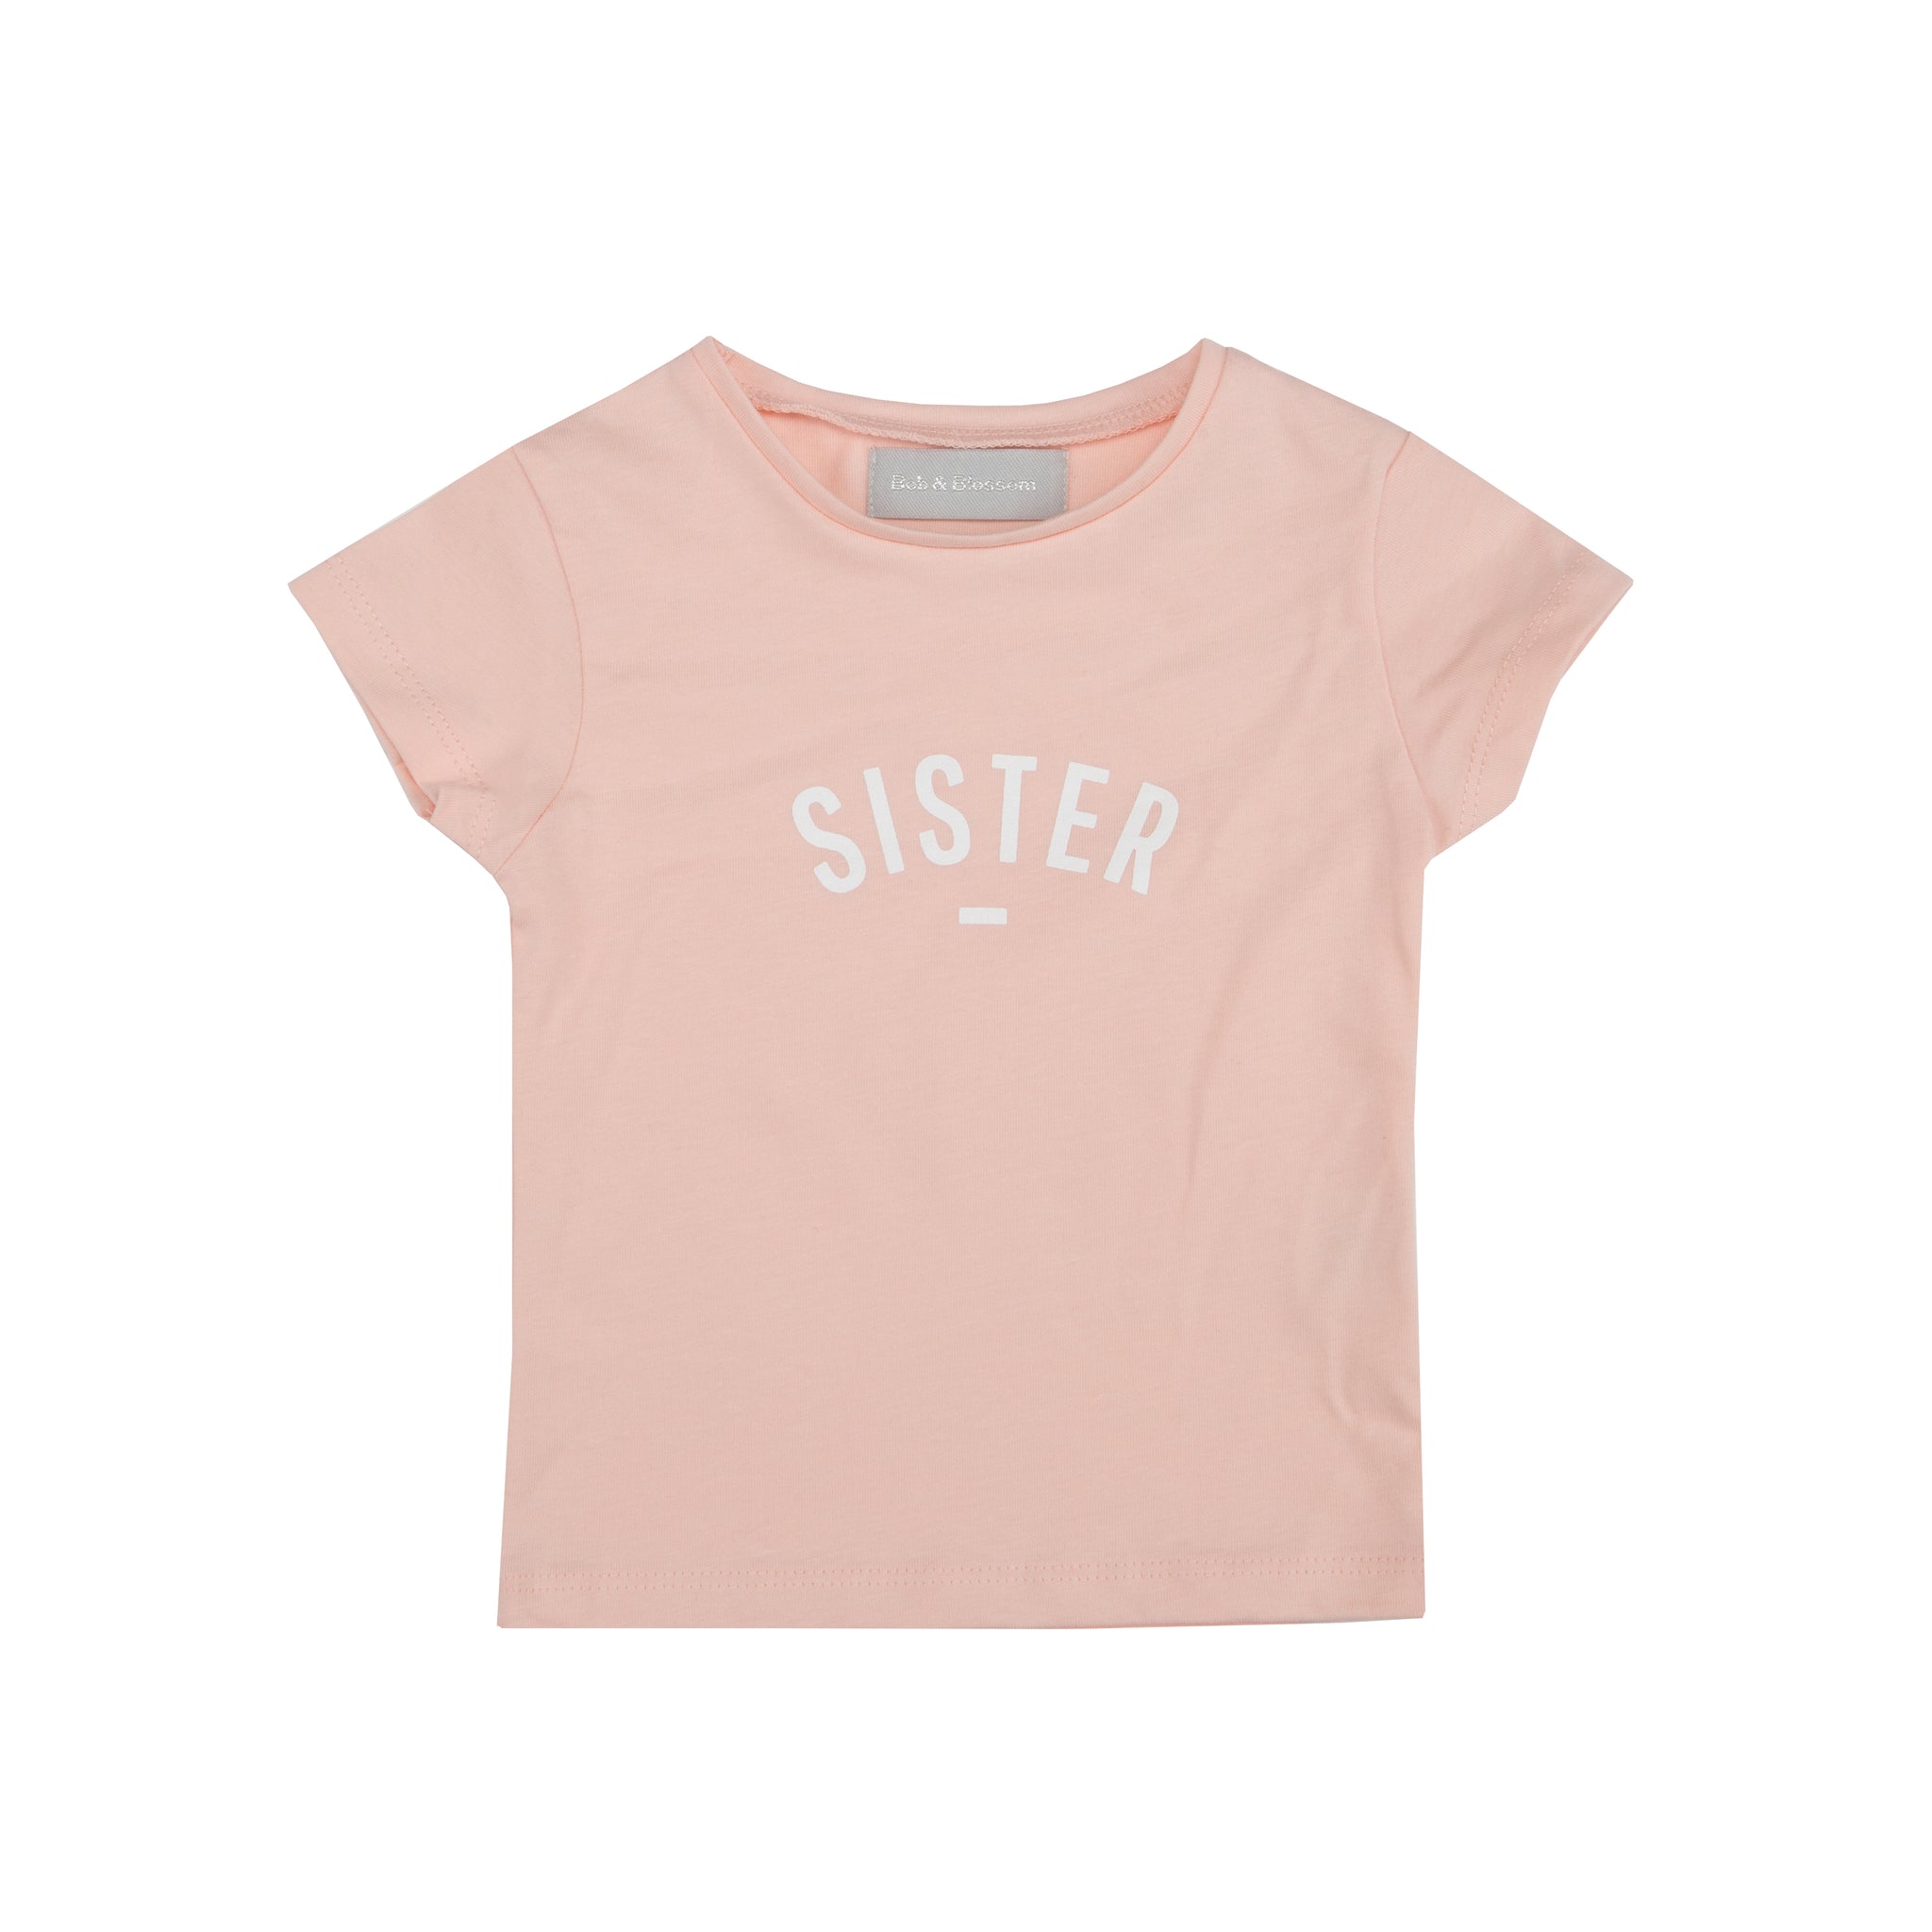 Blush 'SISTER' Cap-Sleeved T Shirt | Bob & Blossom, Clothing for Babies ...